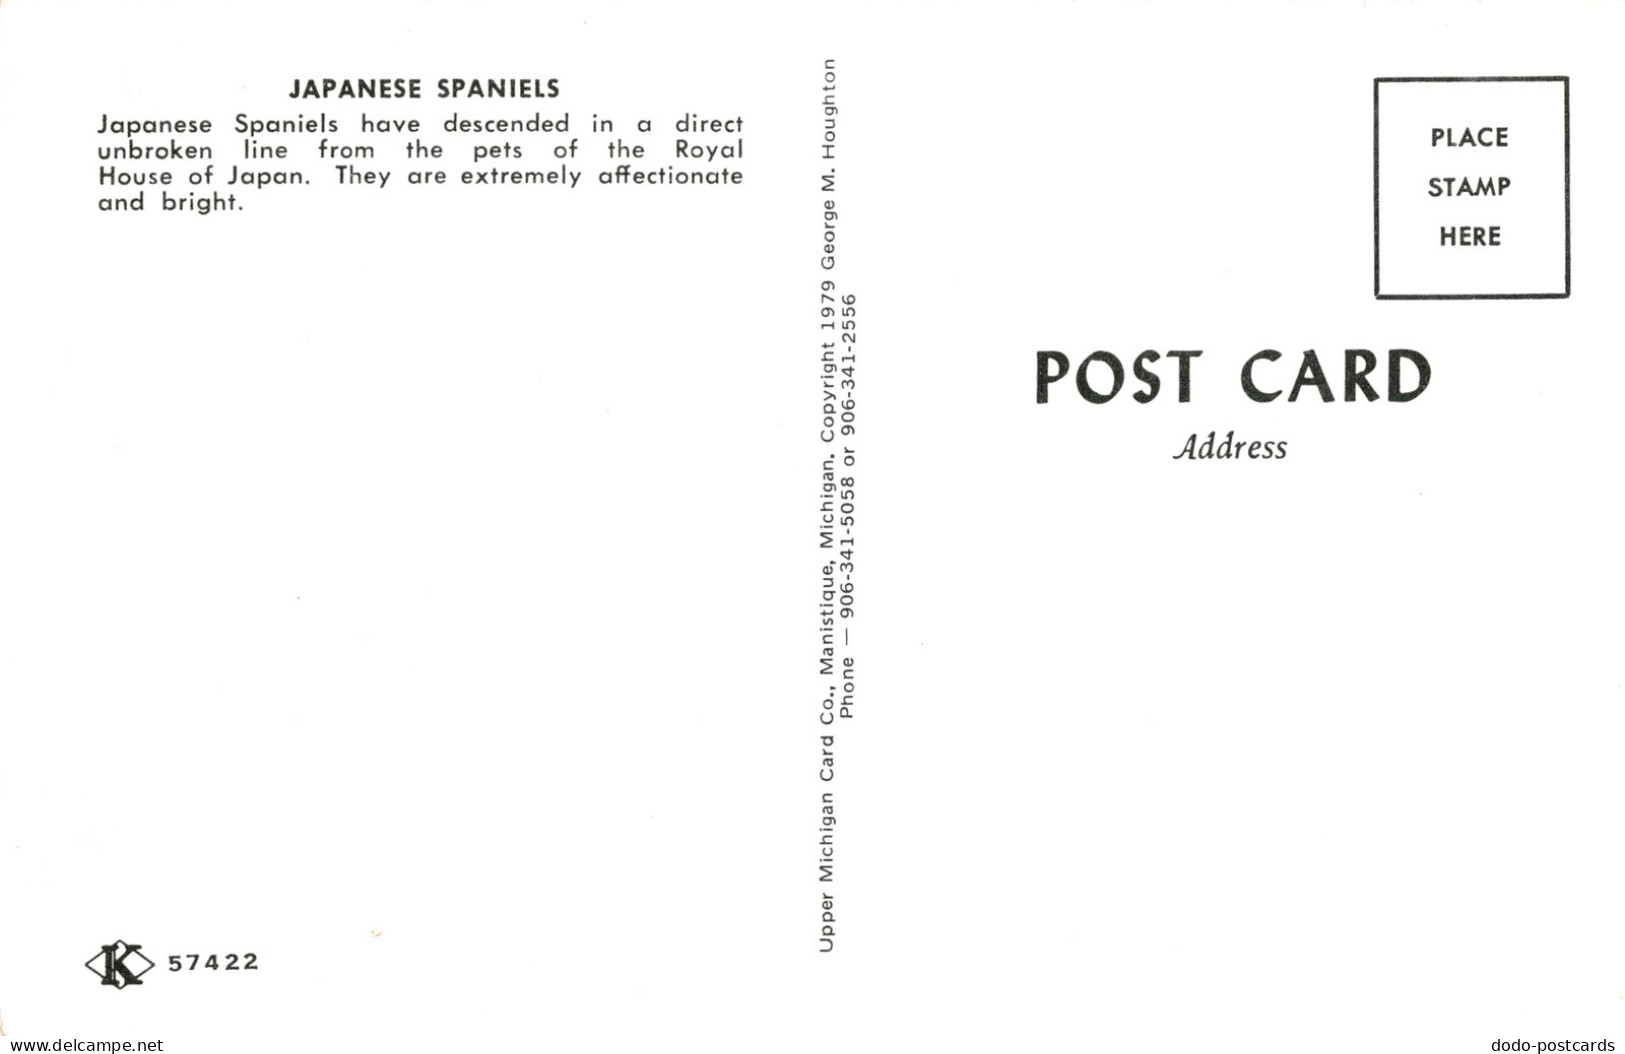 R297184 Japanese Spaniels. Cars. Upper Michigan Card. 1979. George M. Houghton - World